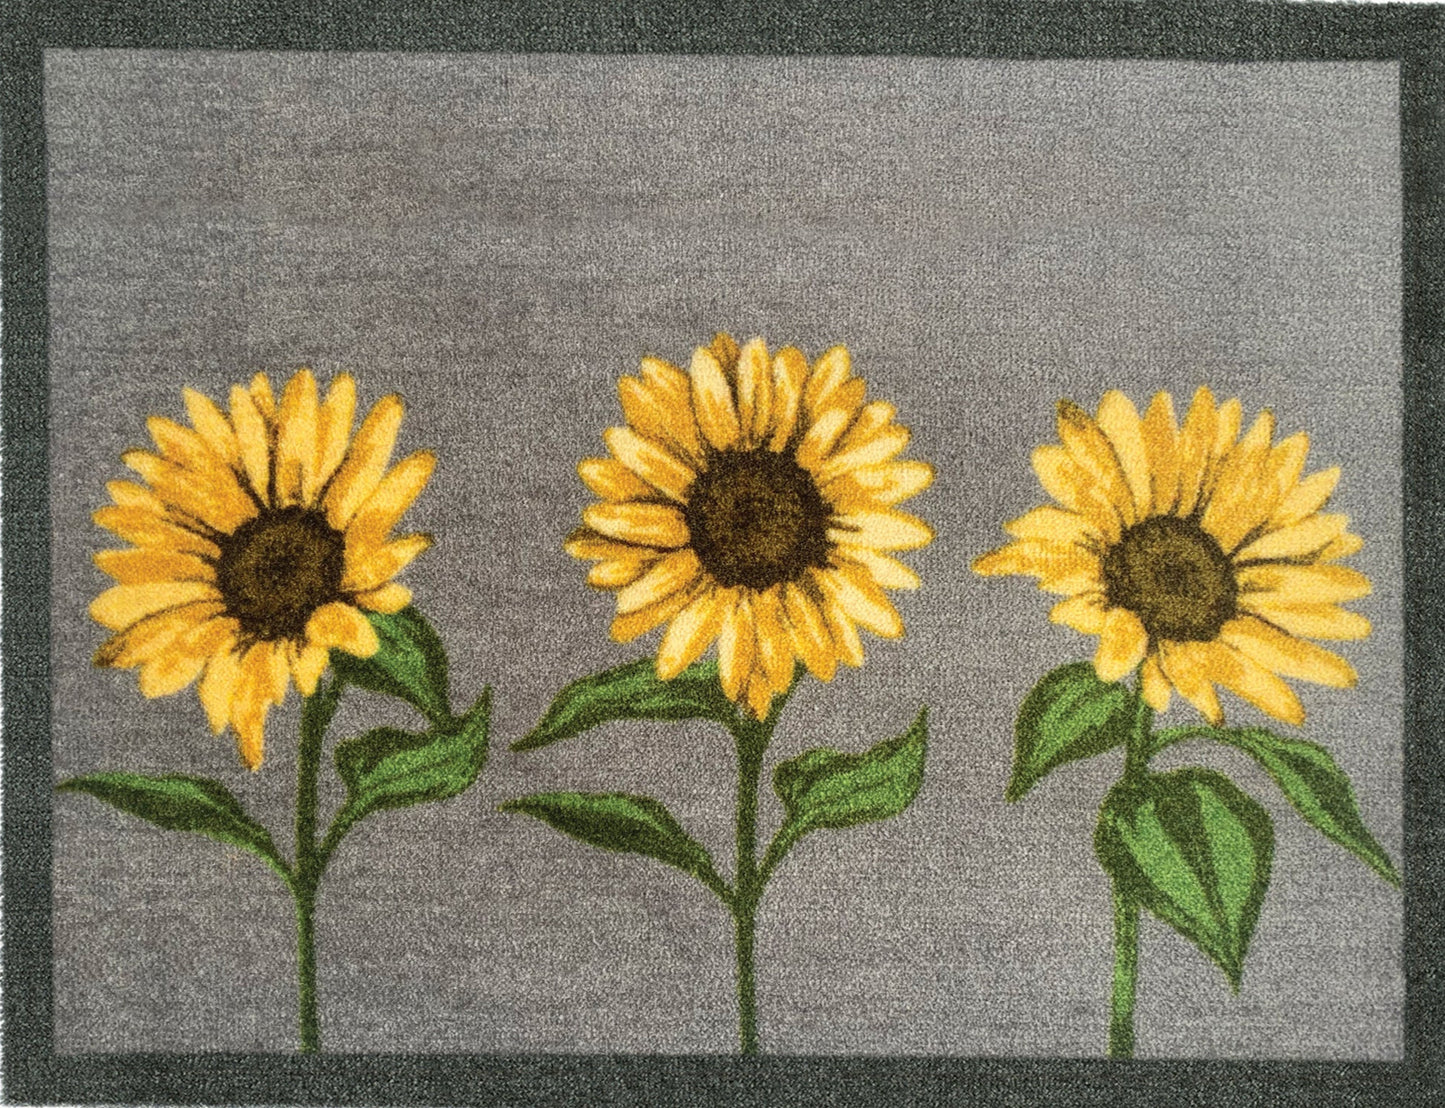 My Mat - Sunflowers